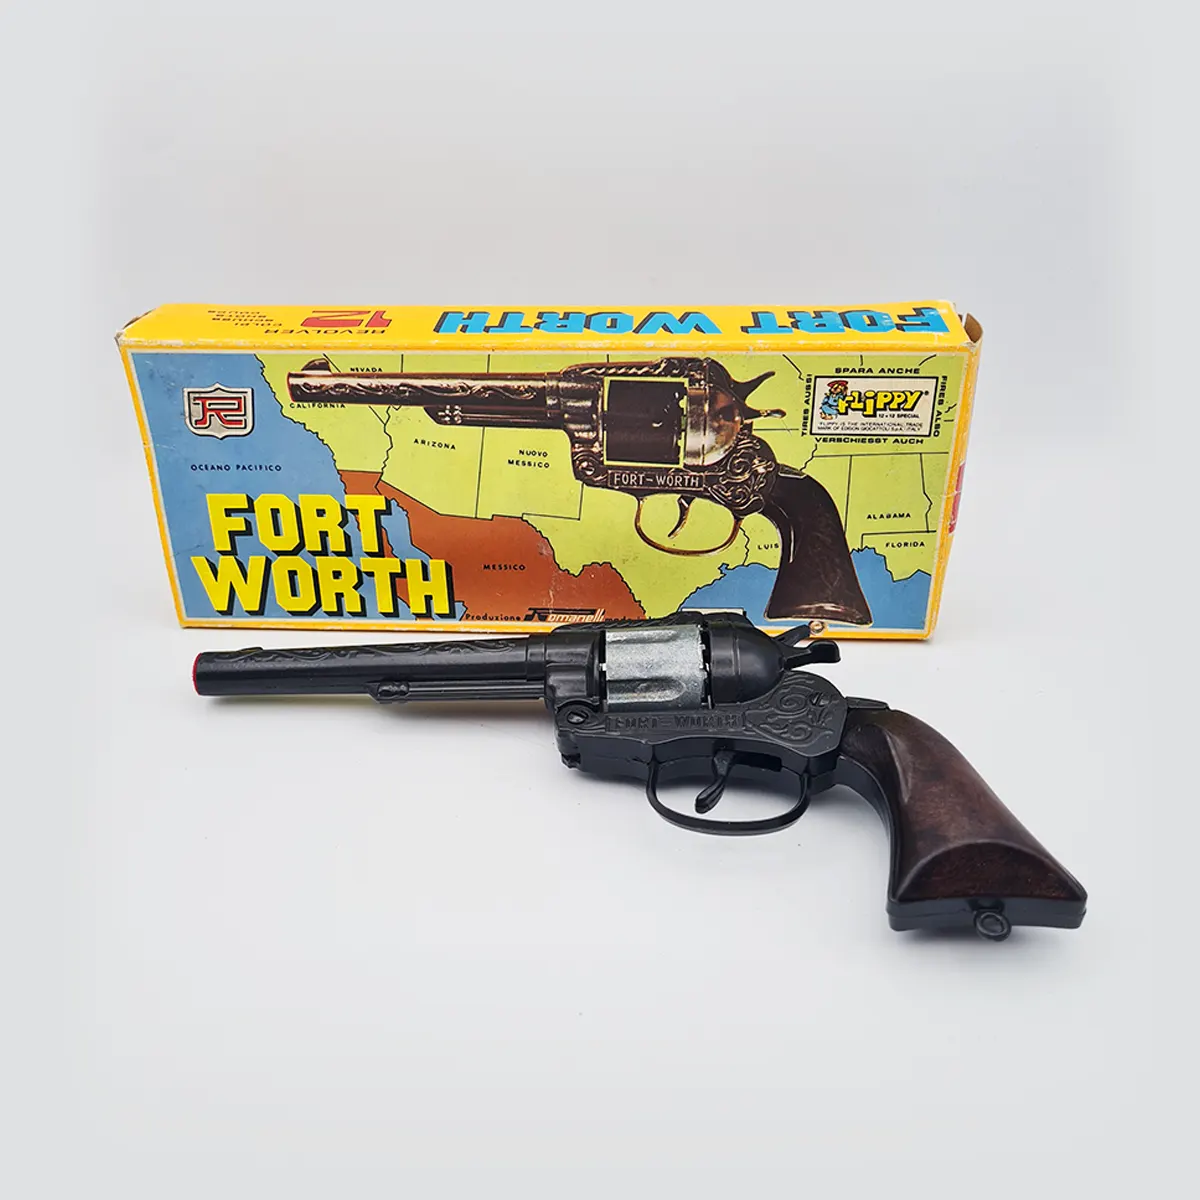 Fort Worth Revolver with Original Box Toy gun